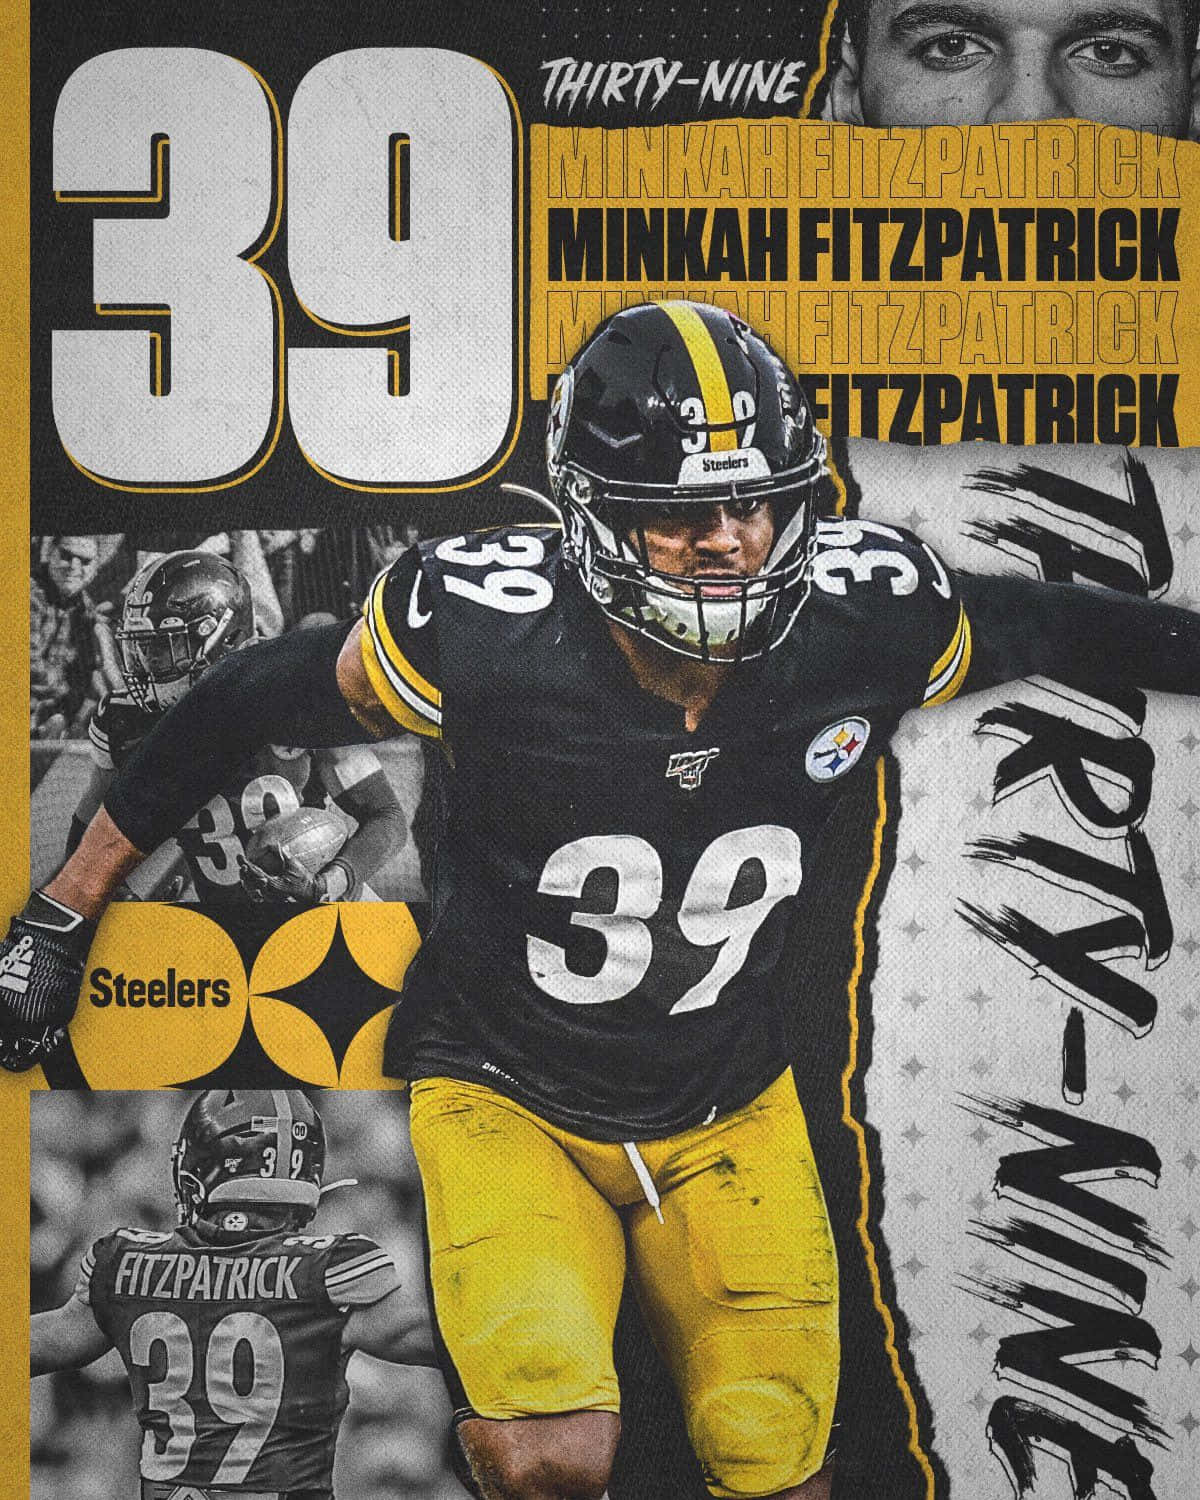 Minkahfitzpatrick Grafik Kunst Pittsburgh Steelers Wallpaper